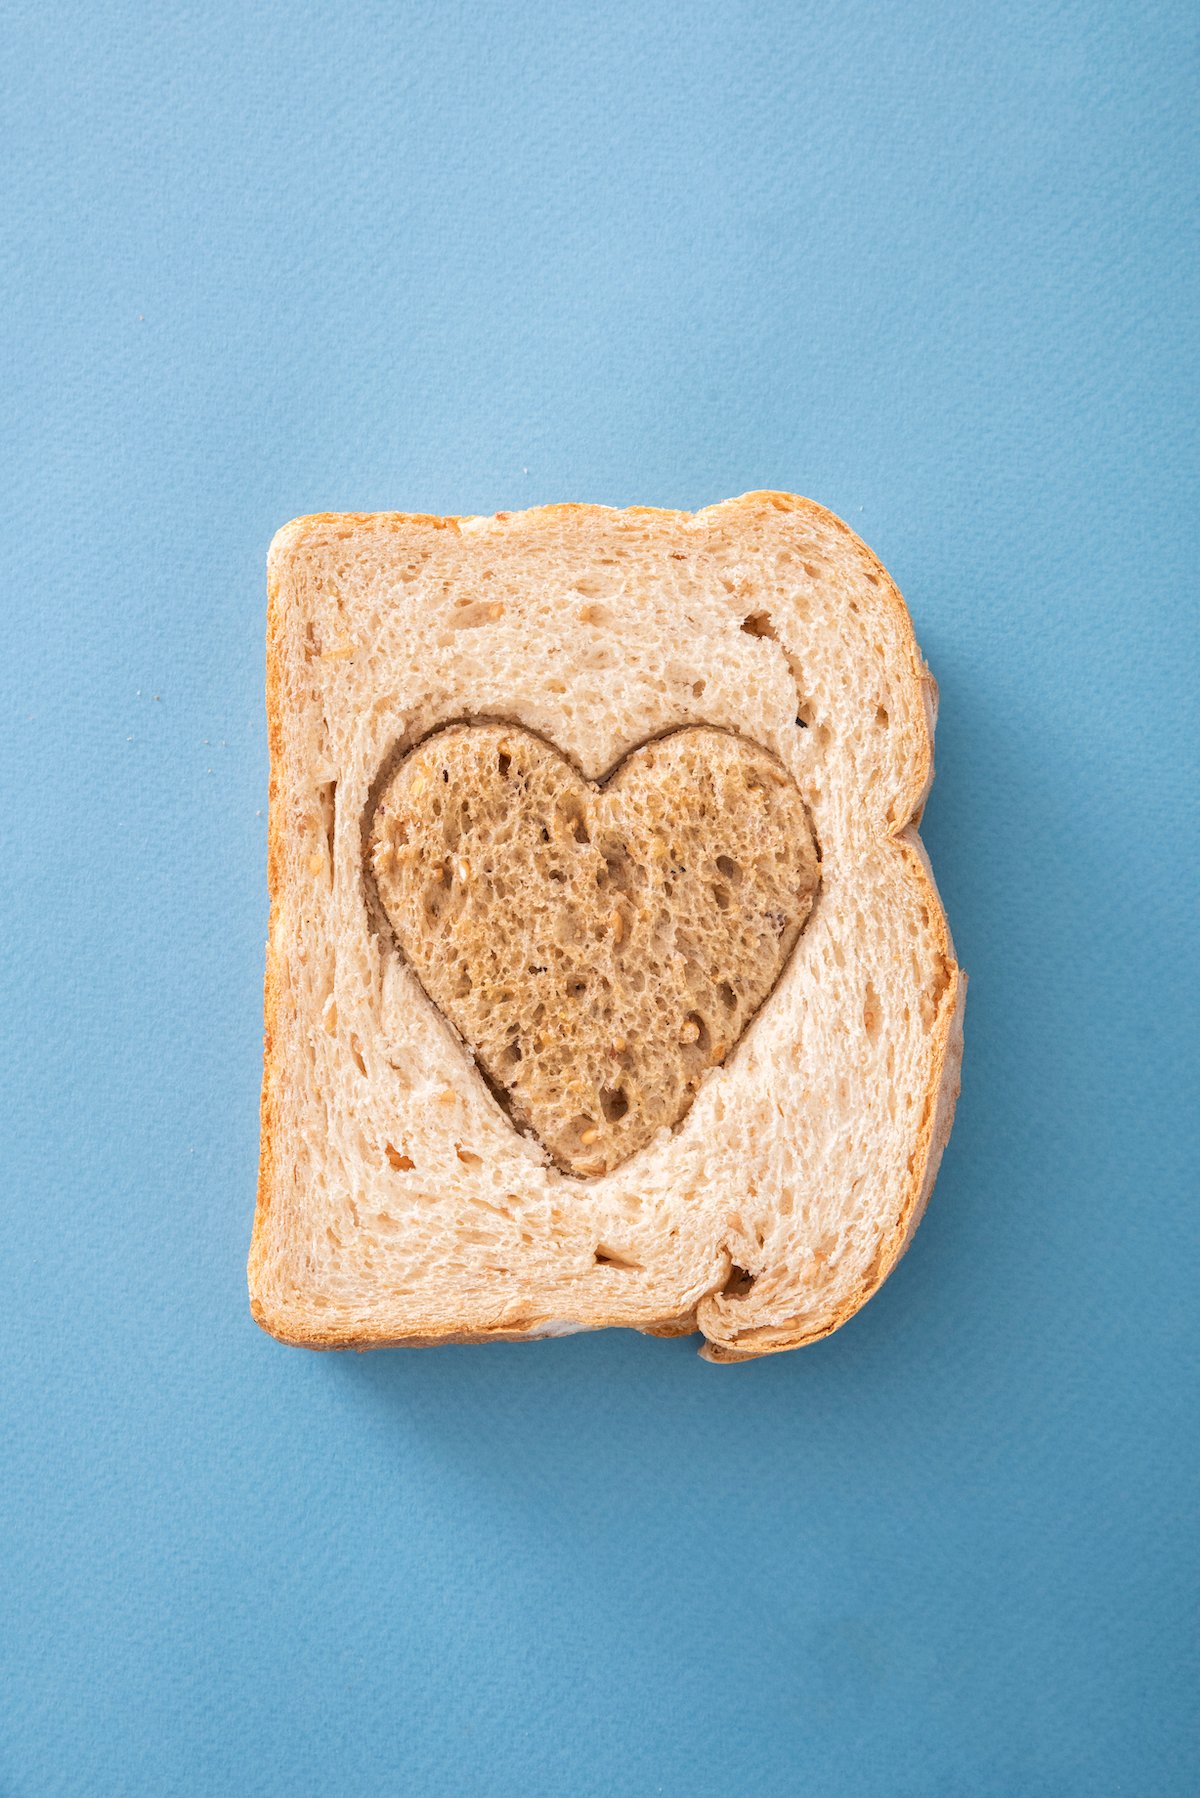 Two-tone sandwich with heart shape.